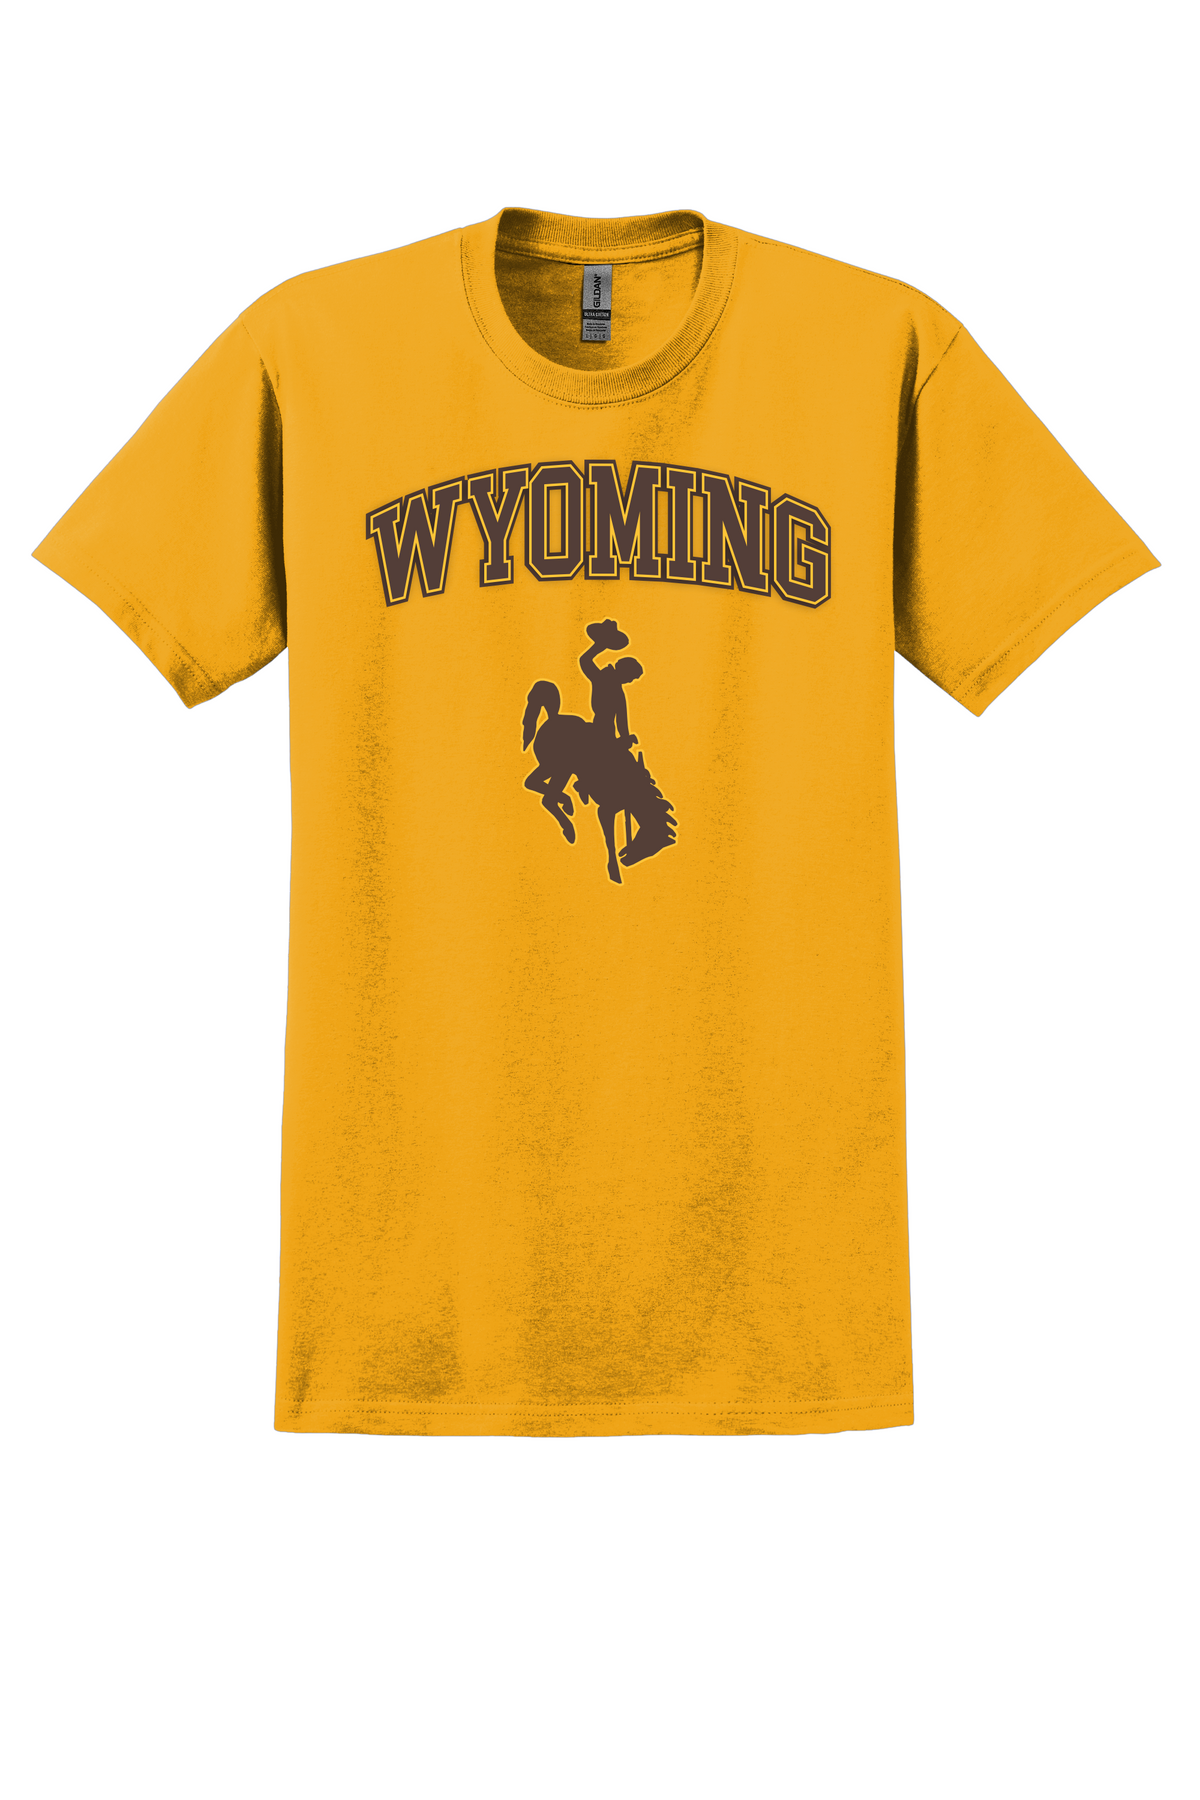  University of Wyoming T-shirt- Gold